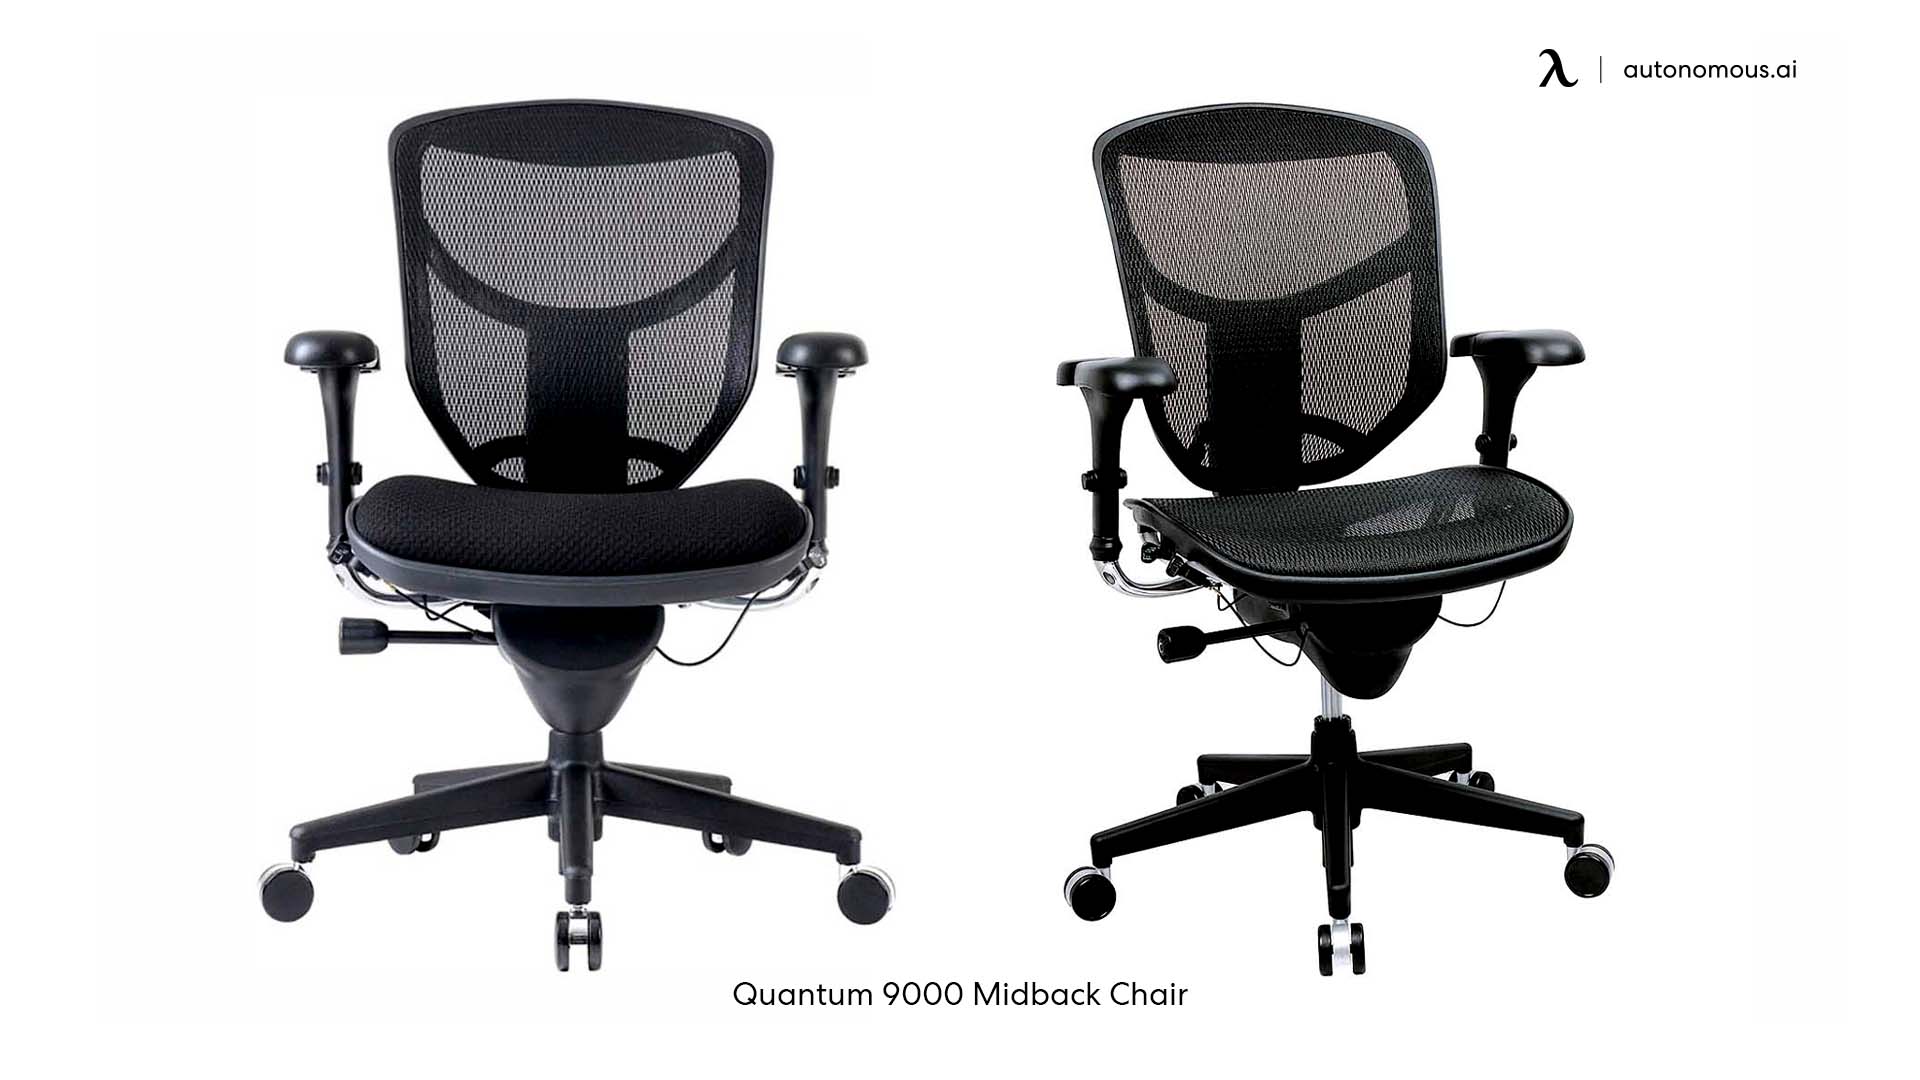 Quantum 9000 Midback mesh office chair